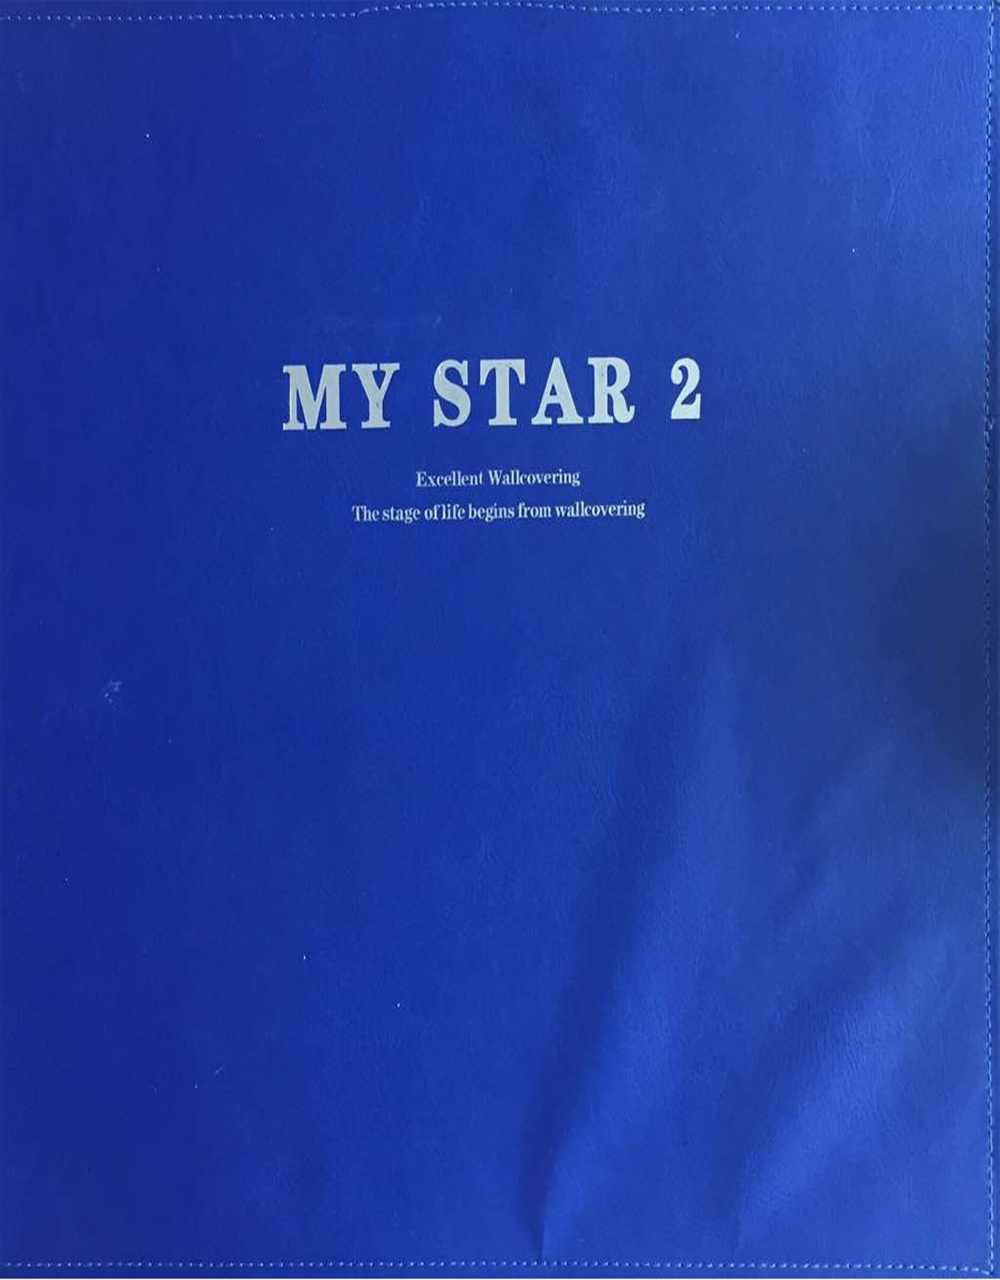 MY STAR 2